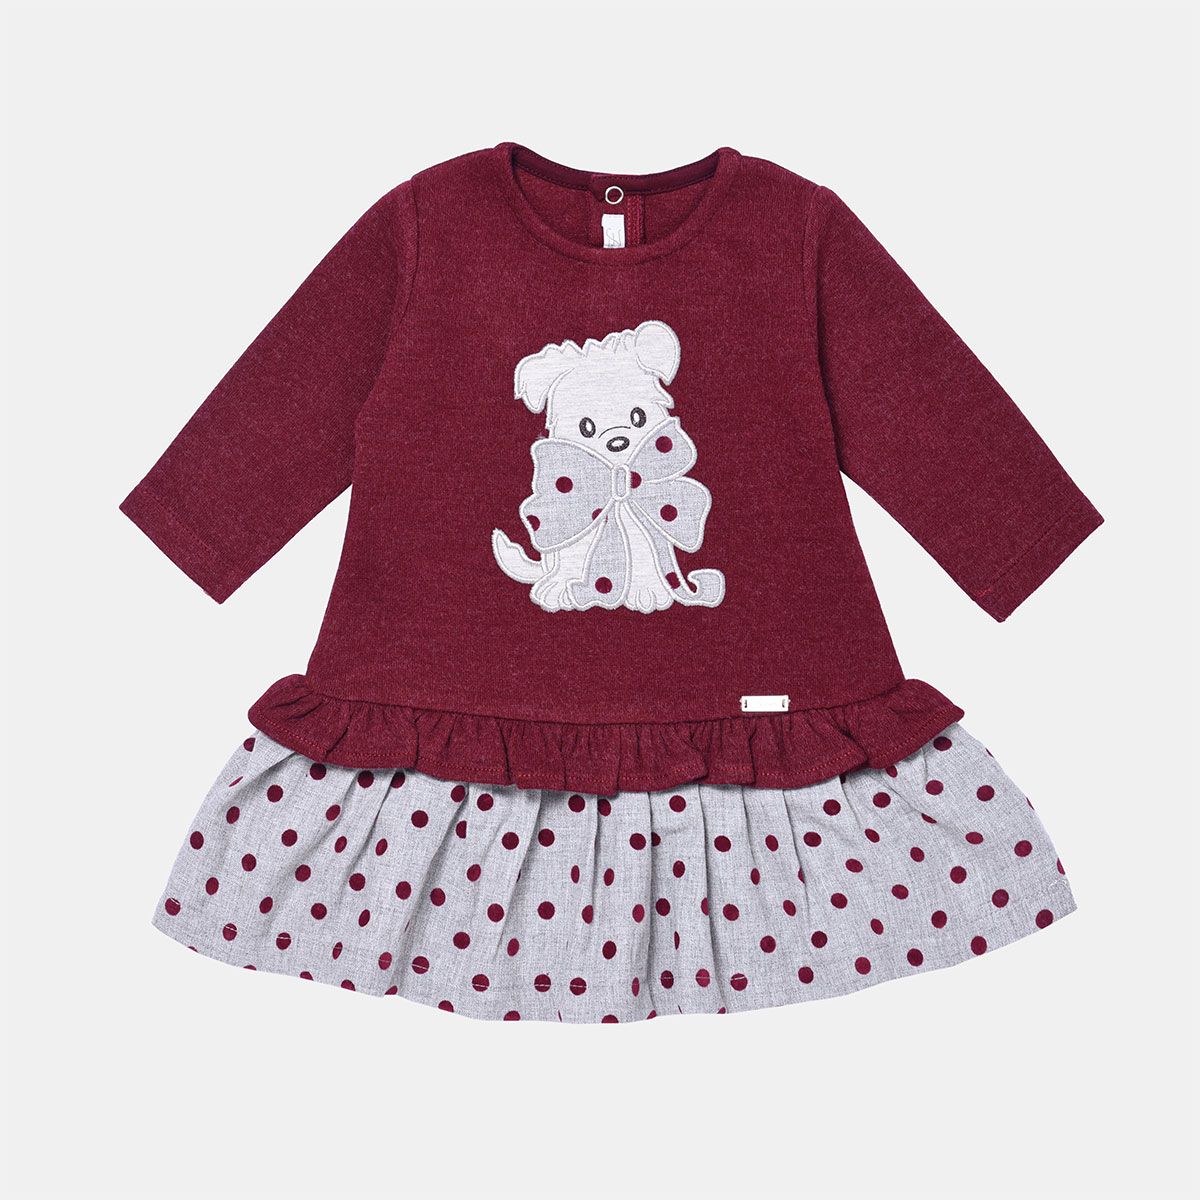 پیراهن نوزادی فیورلا مدل خرس خالدار کد 21523 -  - 3